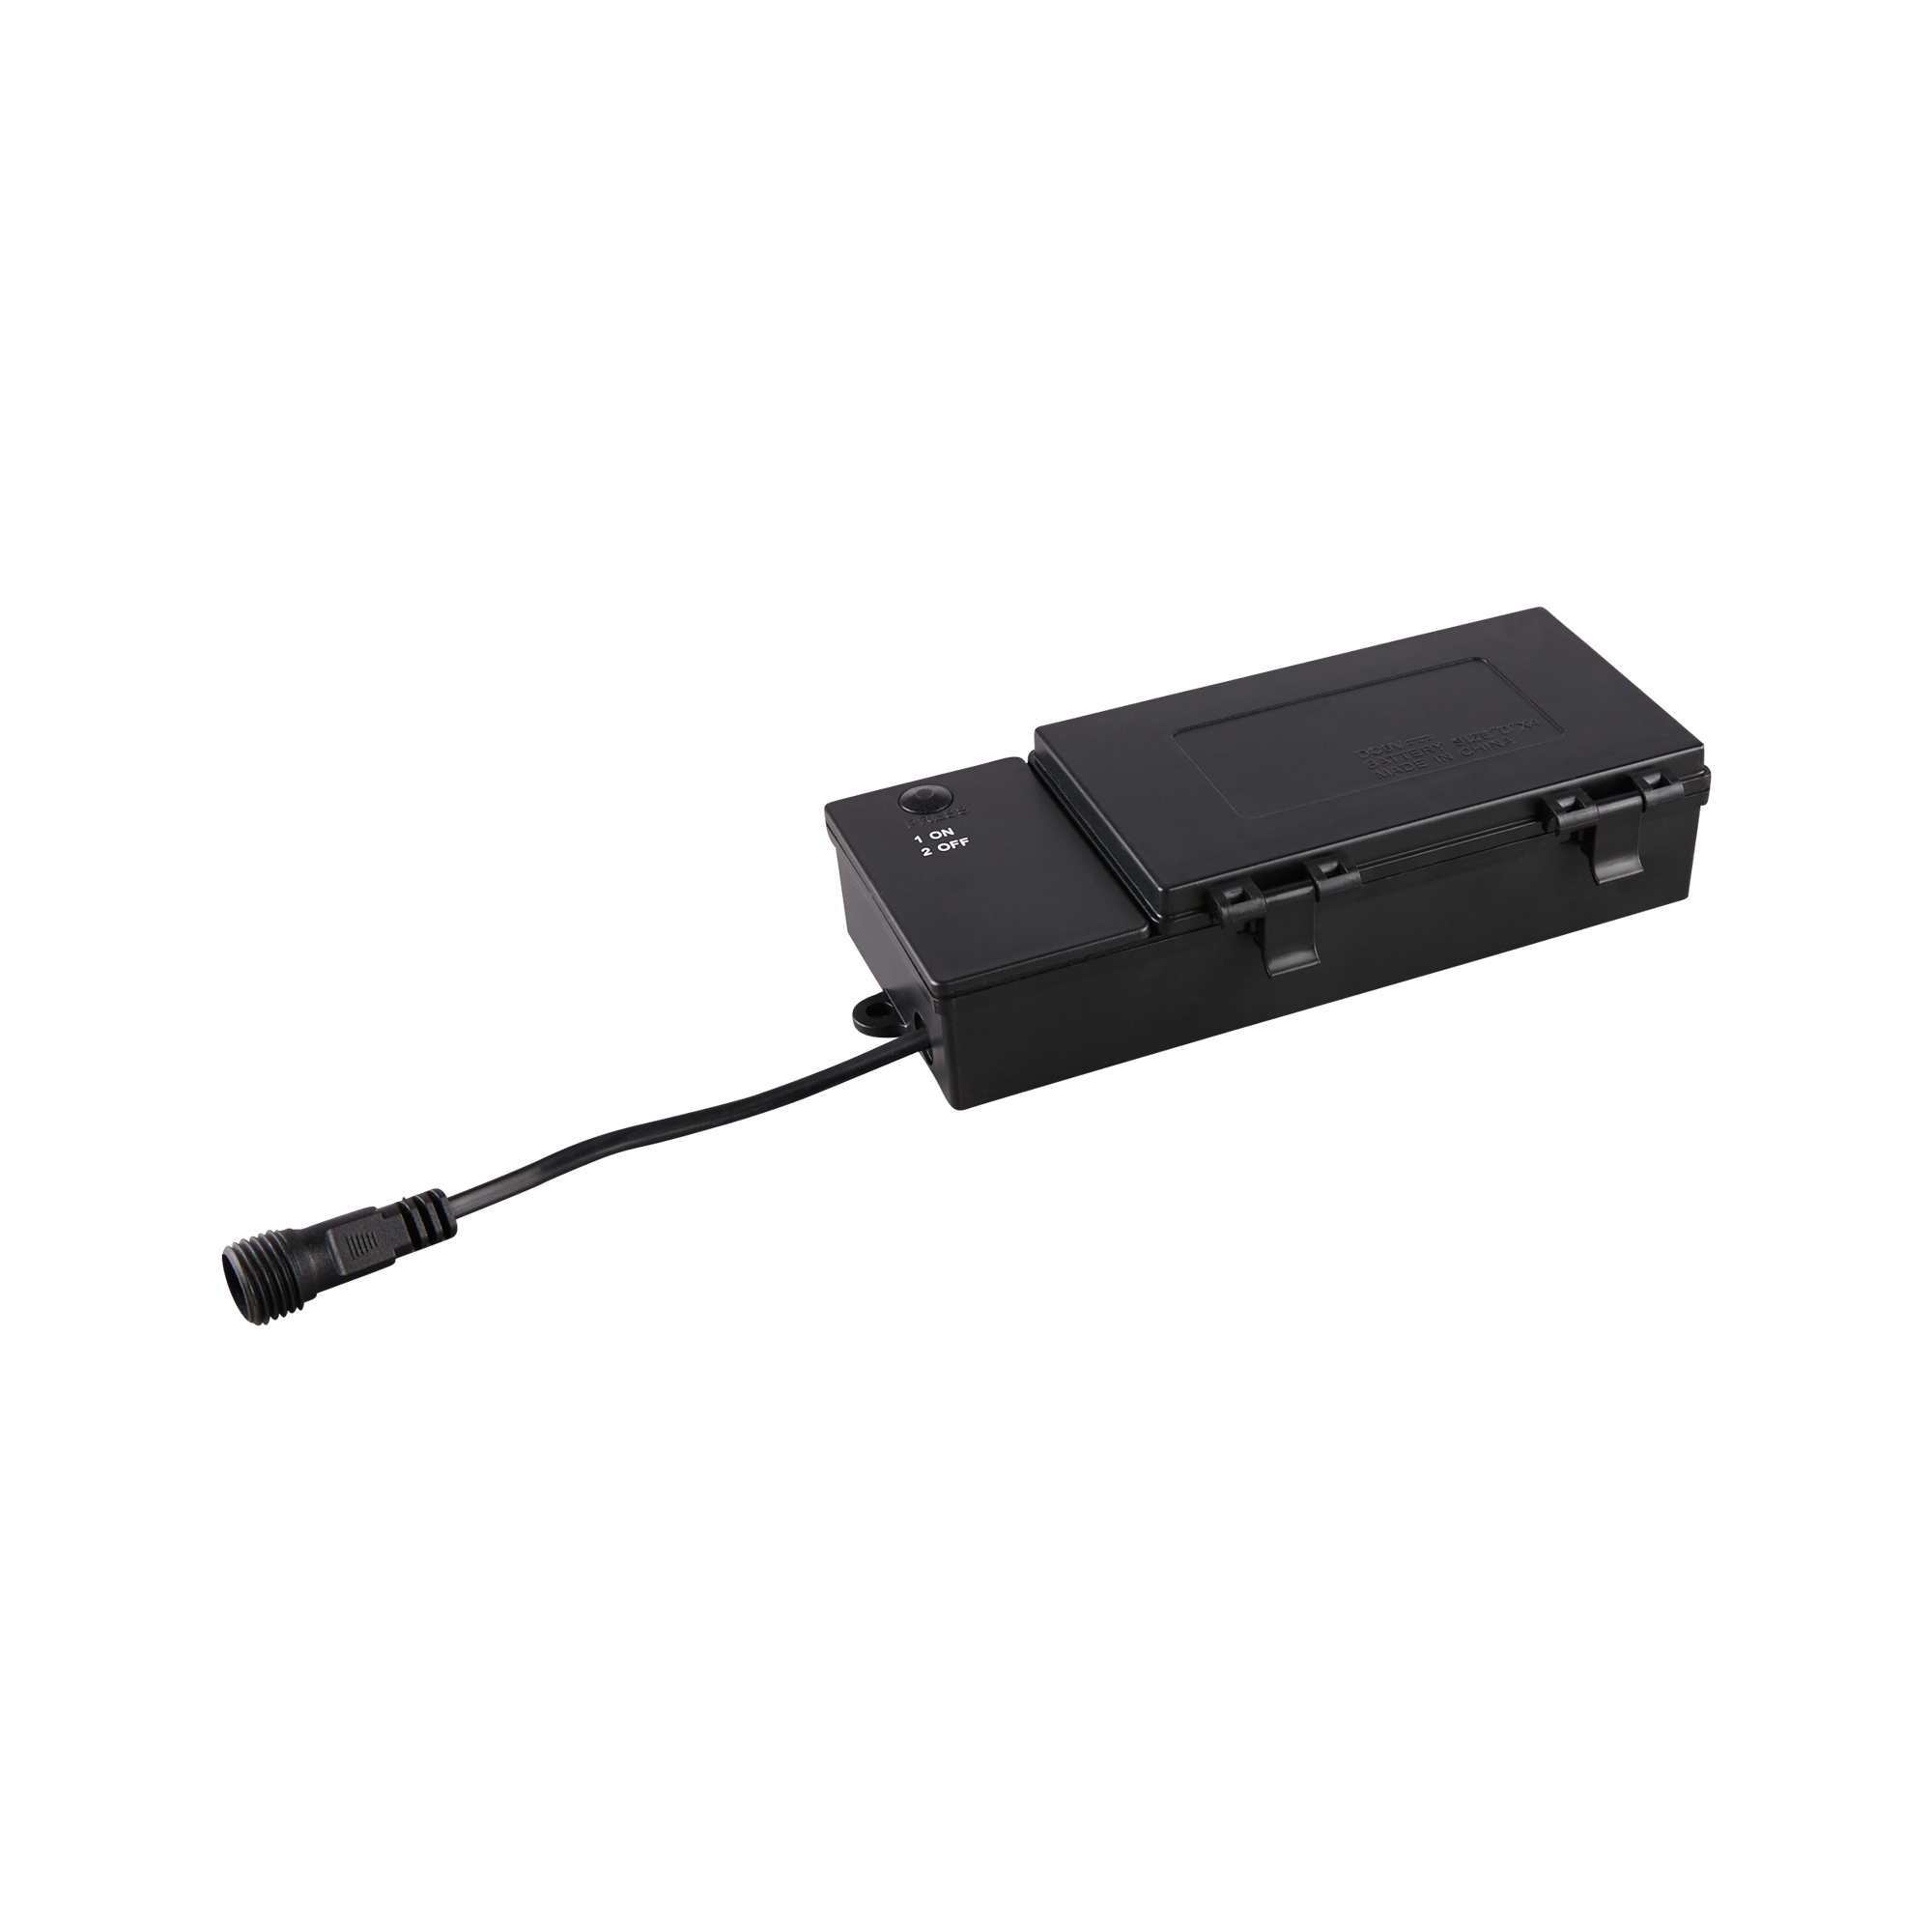 Batteriebox für toom-System 320 LEDs + product video